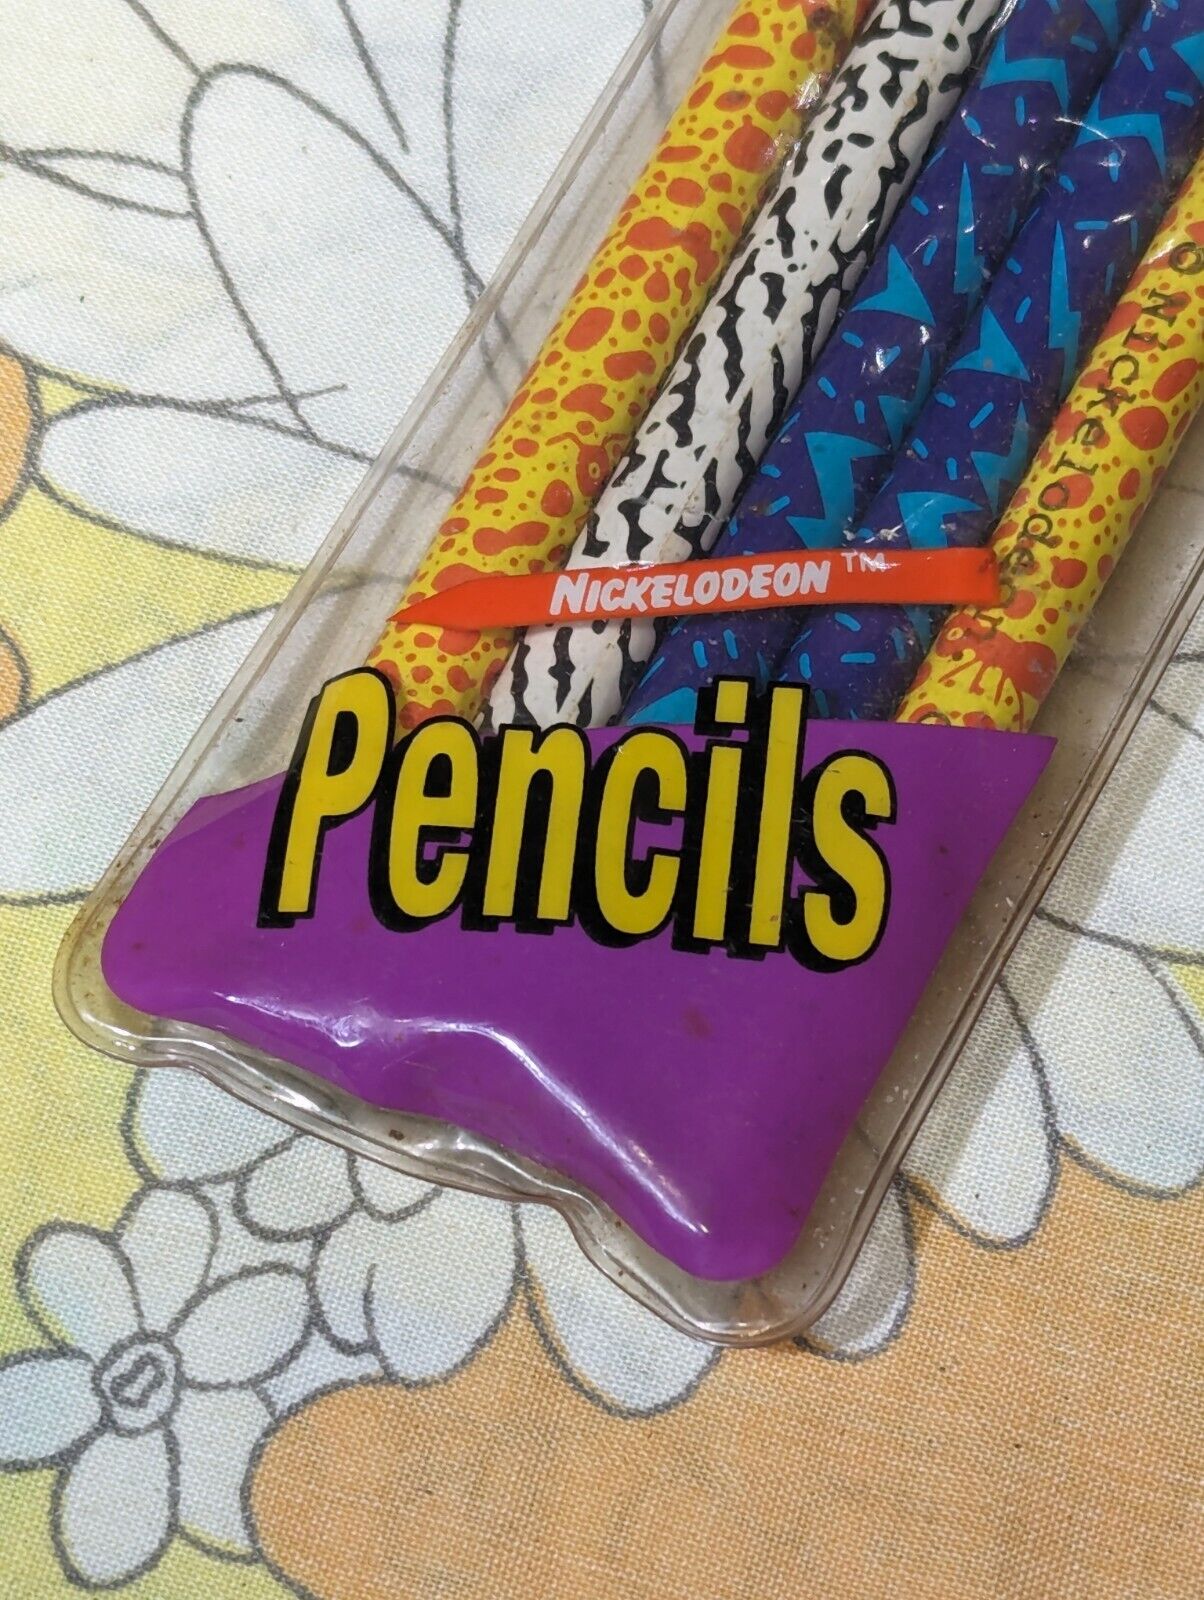 Vintage Nickelodeon Pencils Pouch 5 Pencils 1990s 